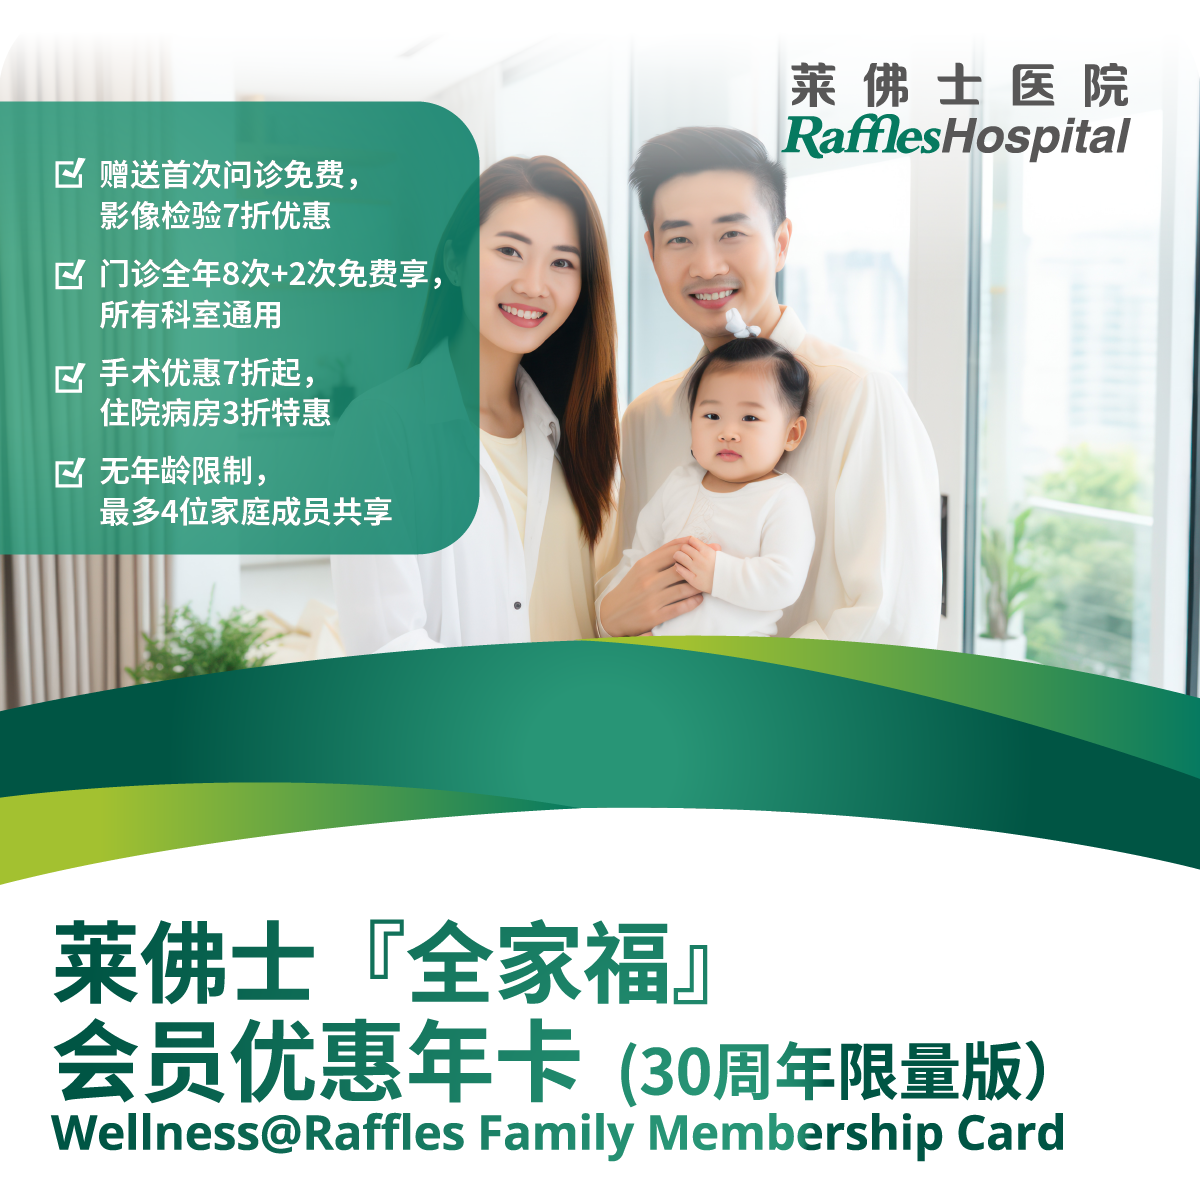 Raffles Hospital Beijing - Member Services - Wellness@Raffles Family Membership Card